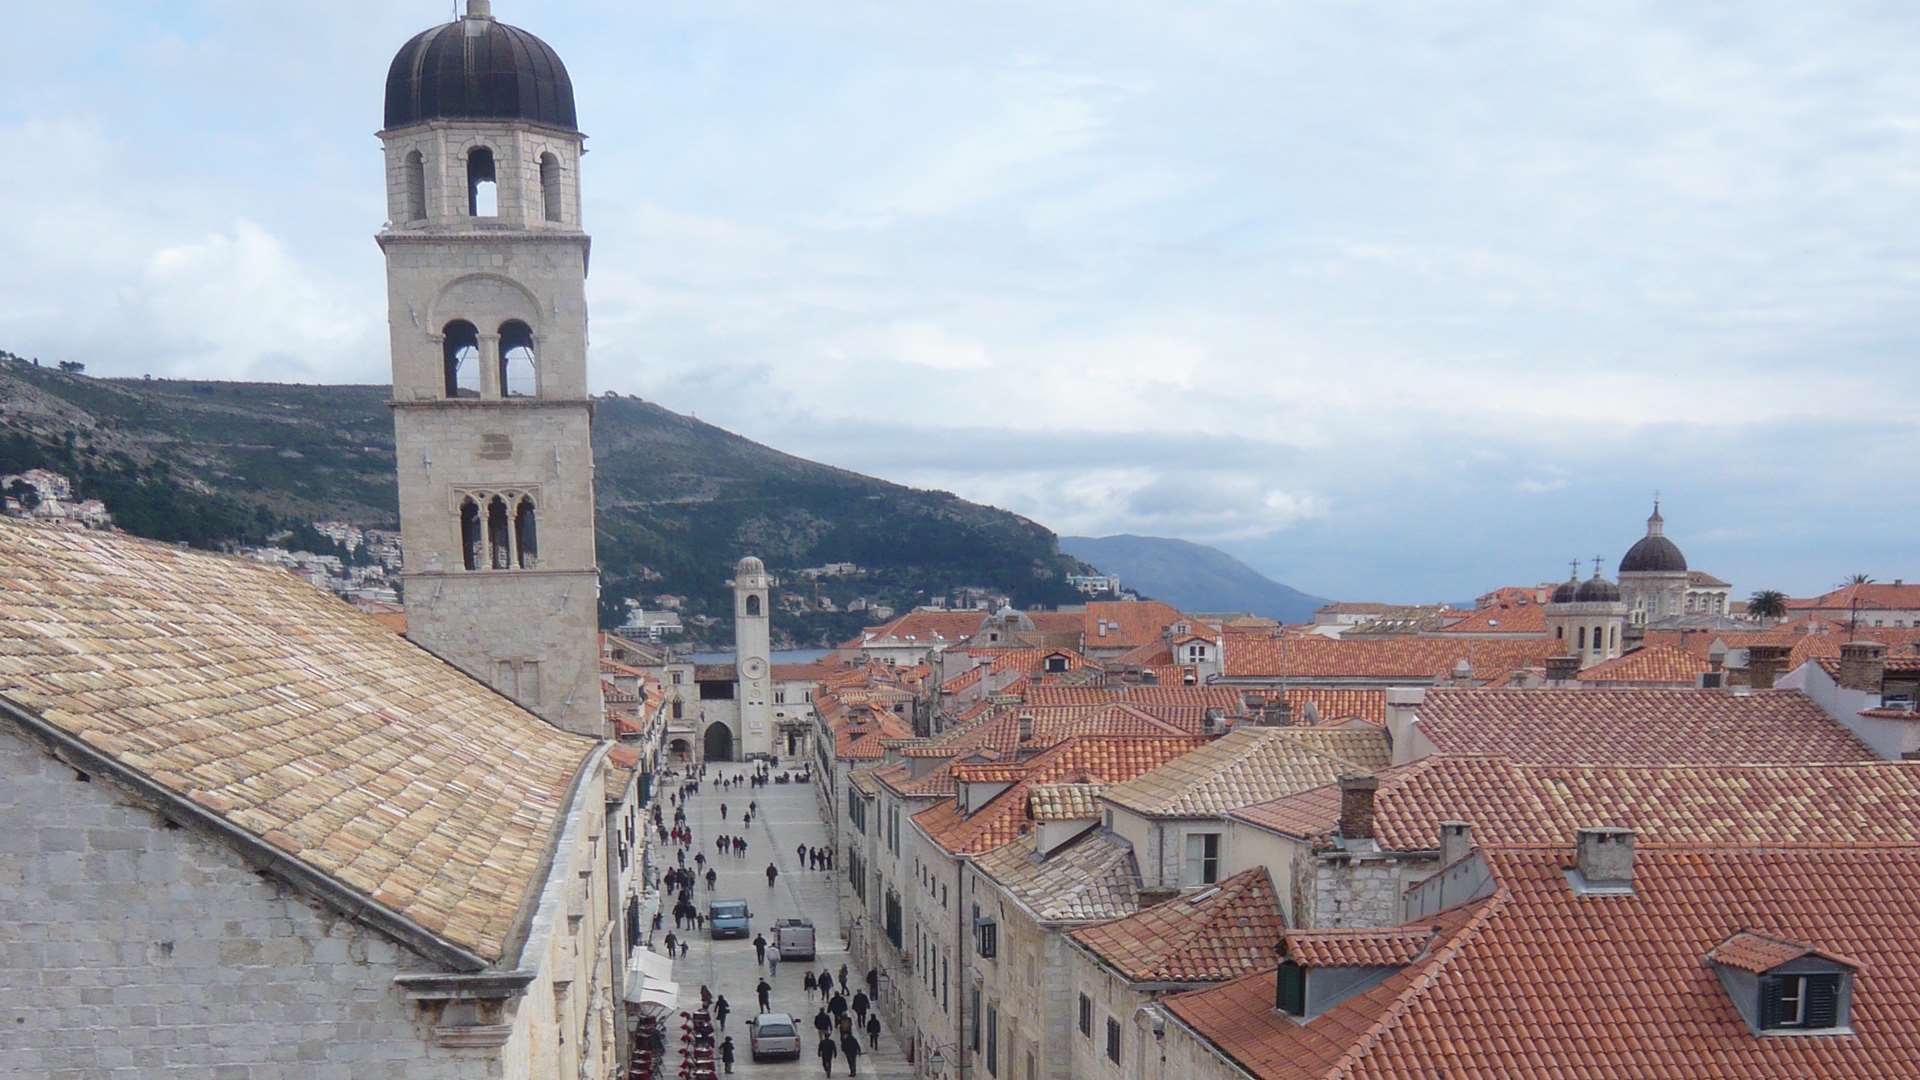 The Stradun, Dubrovnik's main street